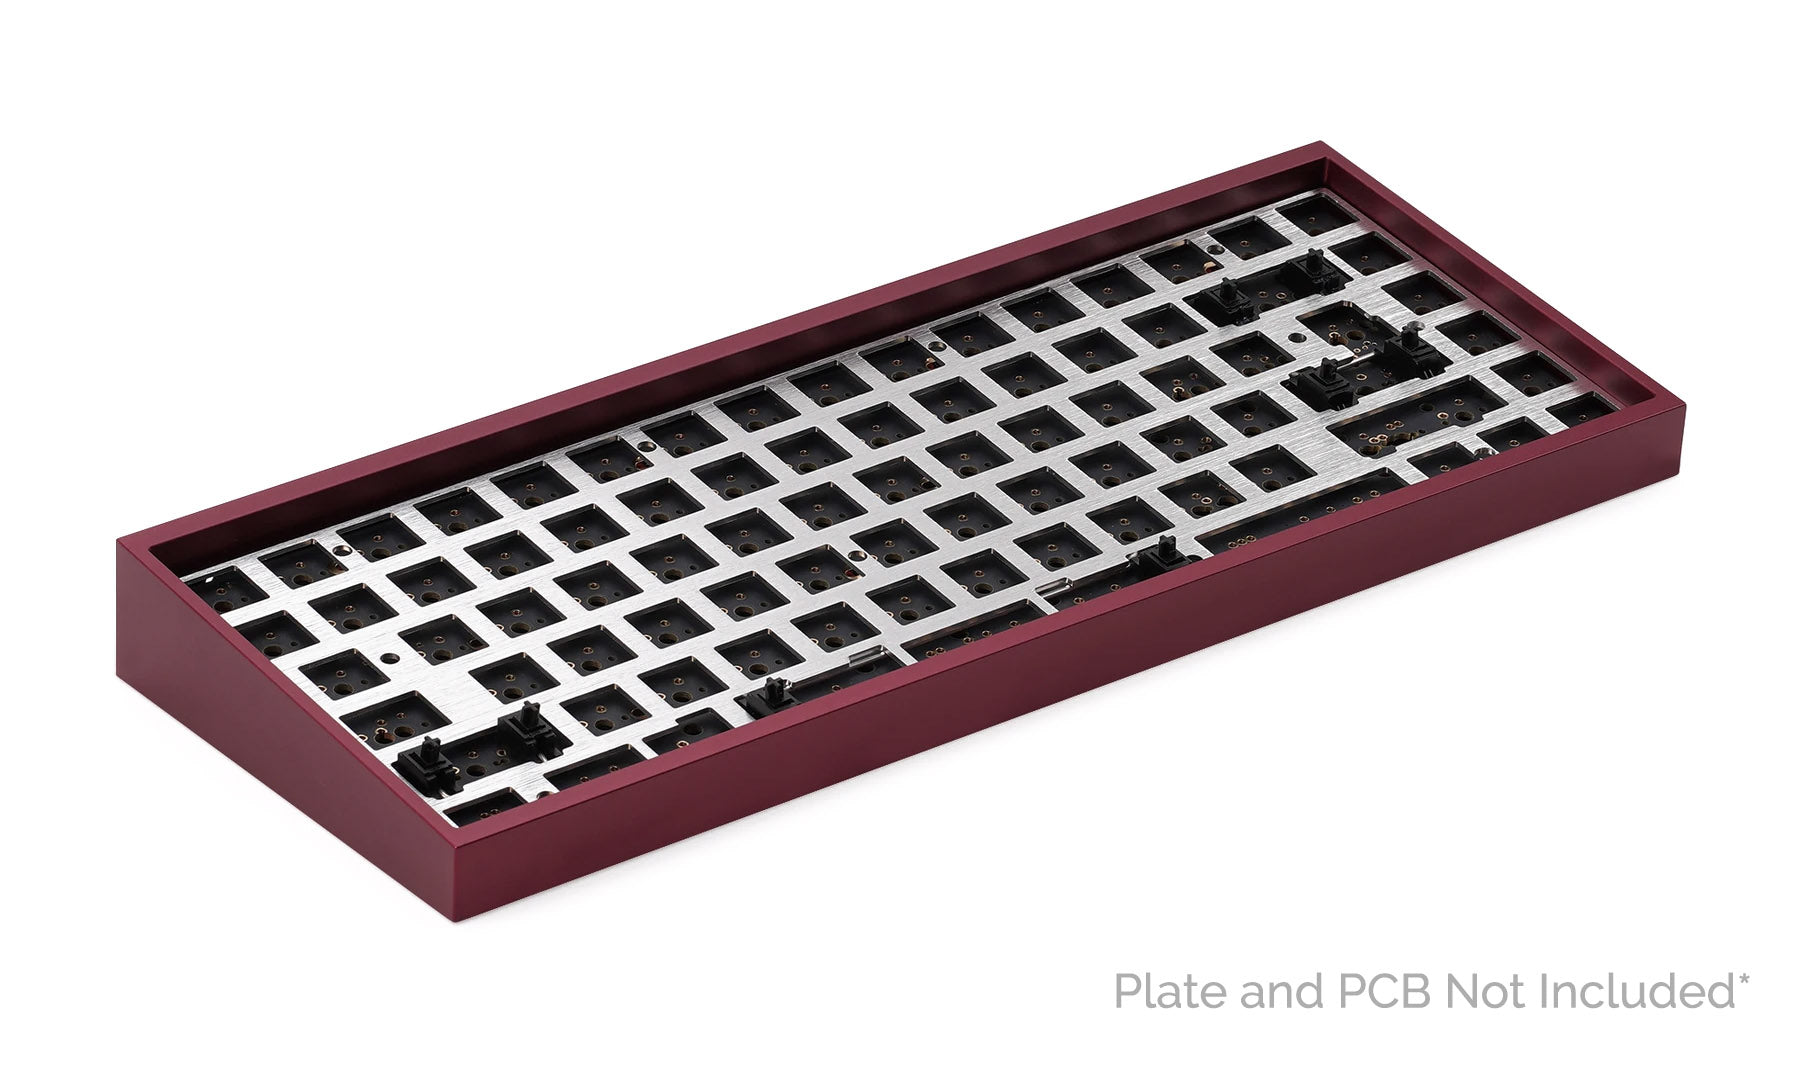 KBDFans Tofu 84 Aluminum Mechanical Keyboard Case MKEUD89PJ0 |42832|